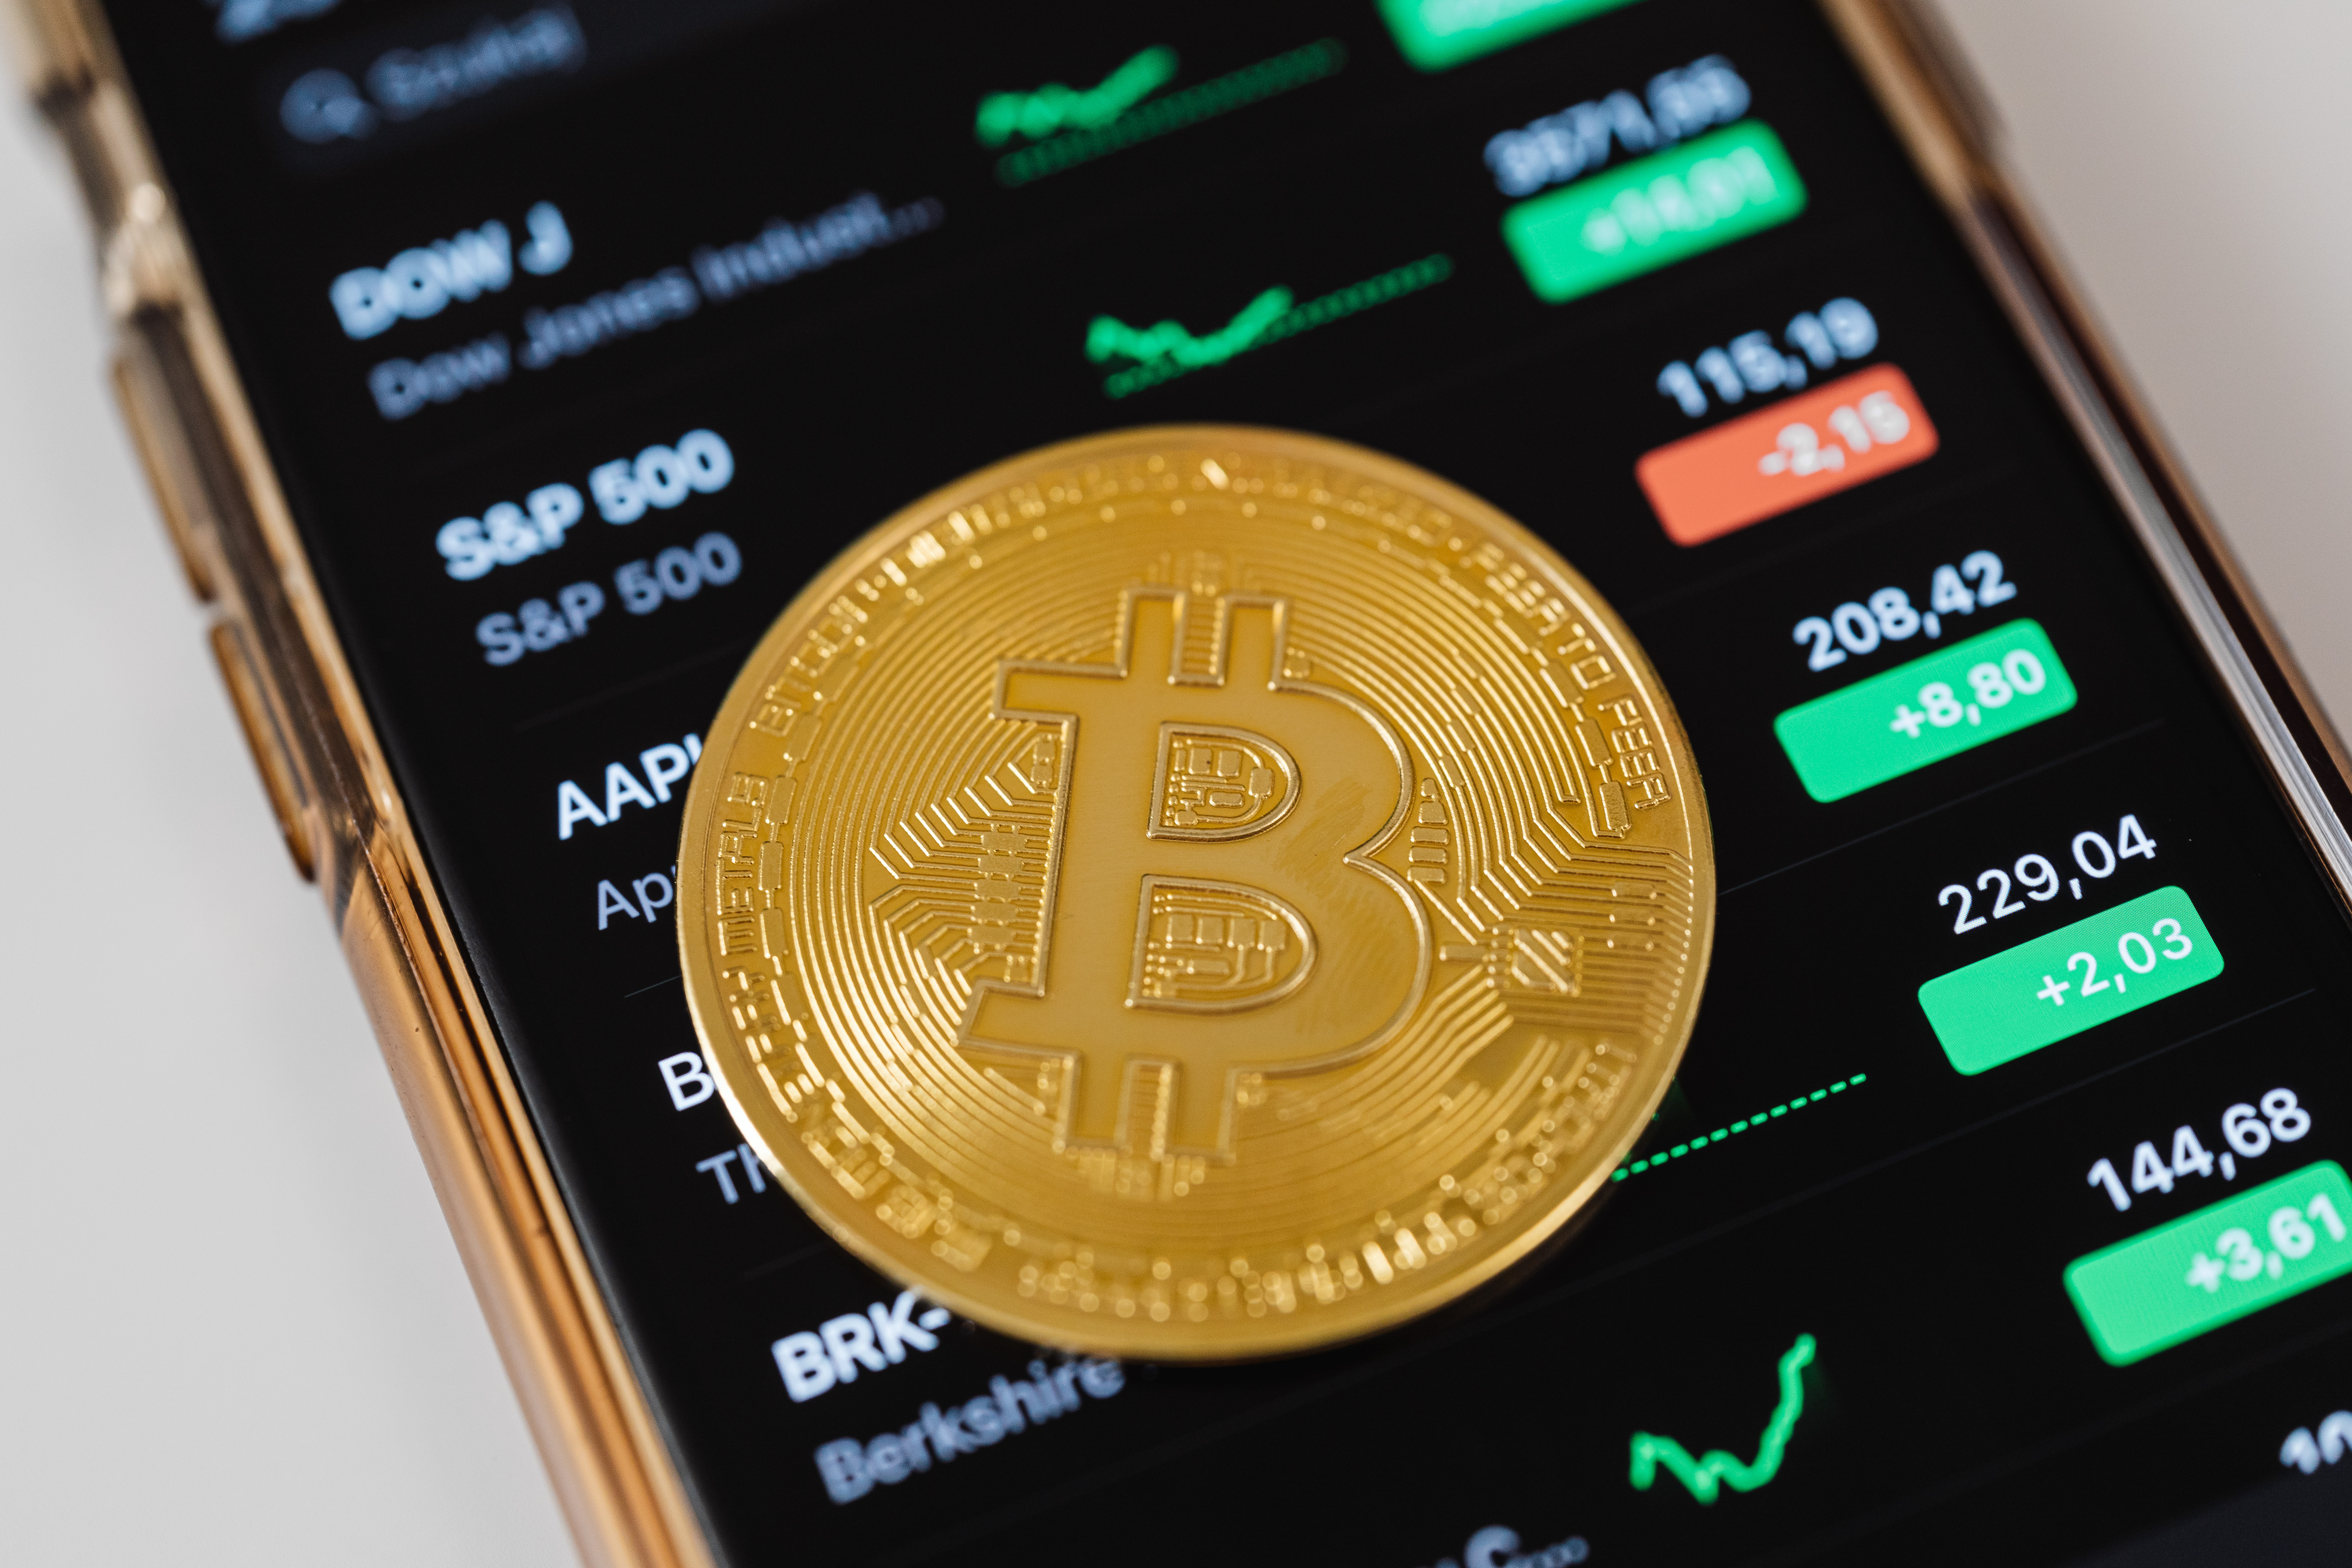 Cara kerja Bitcoin membutuhkan blockchain, penambangan, dan dompet Bitcoin